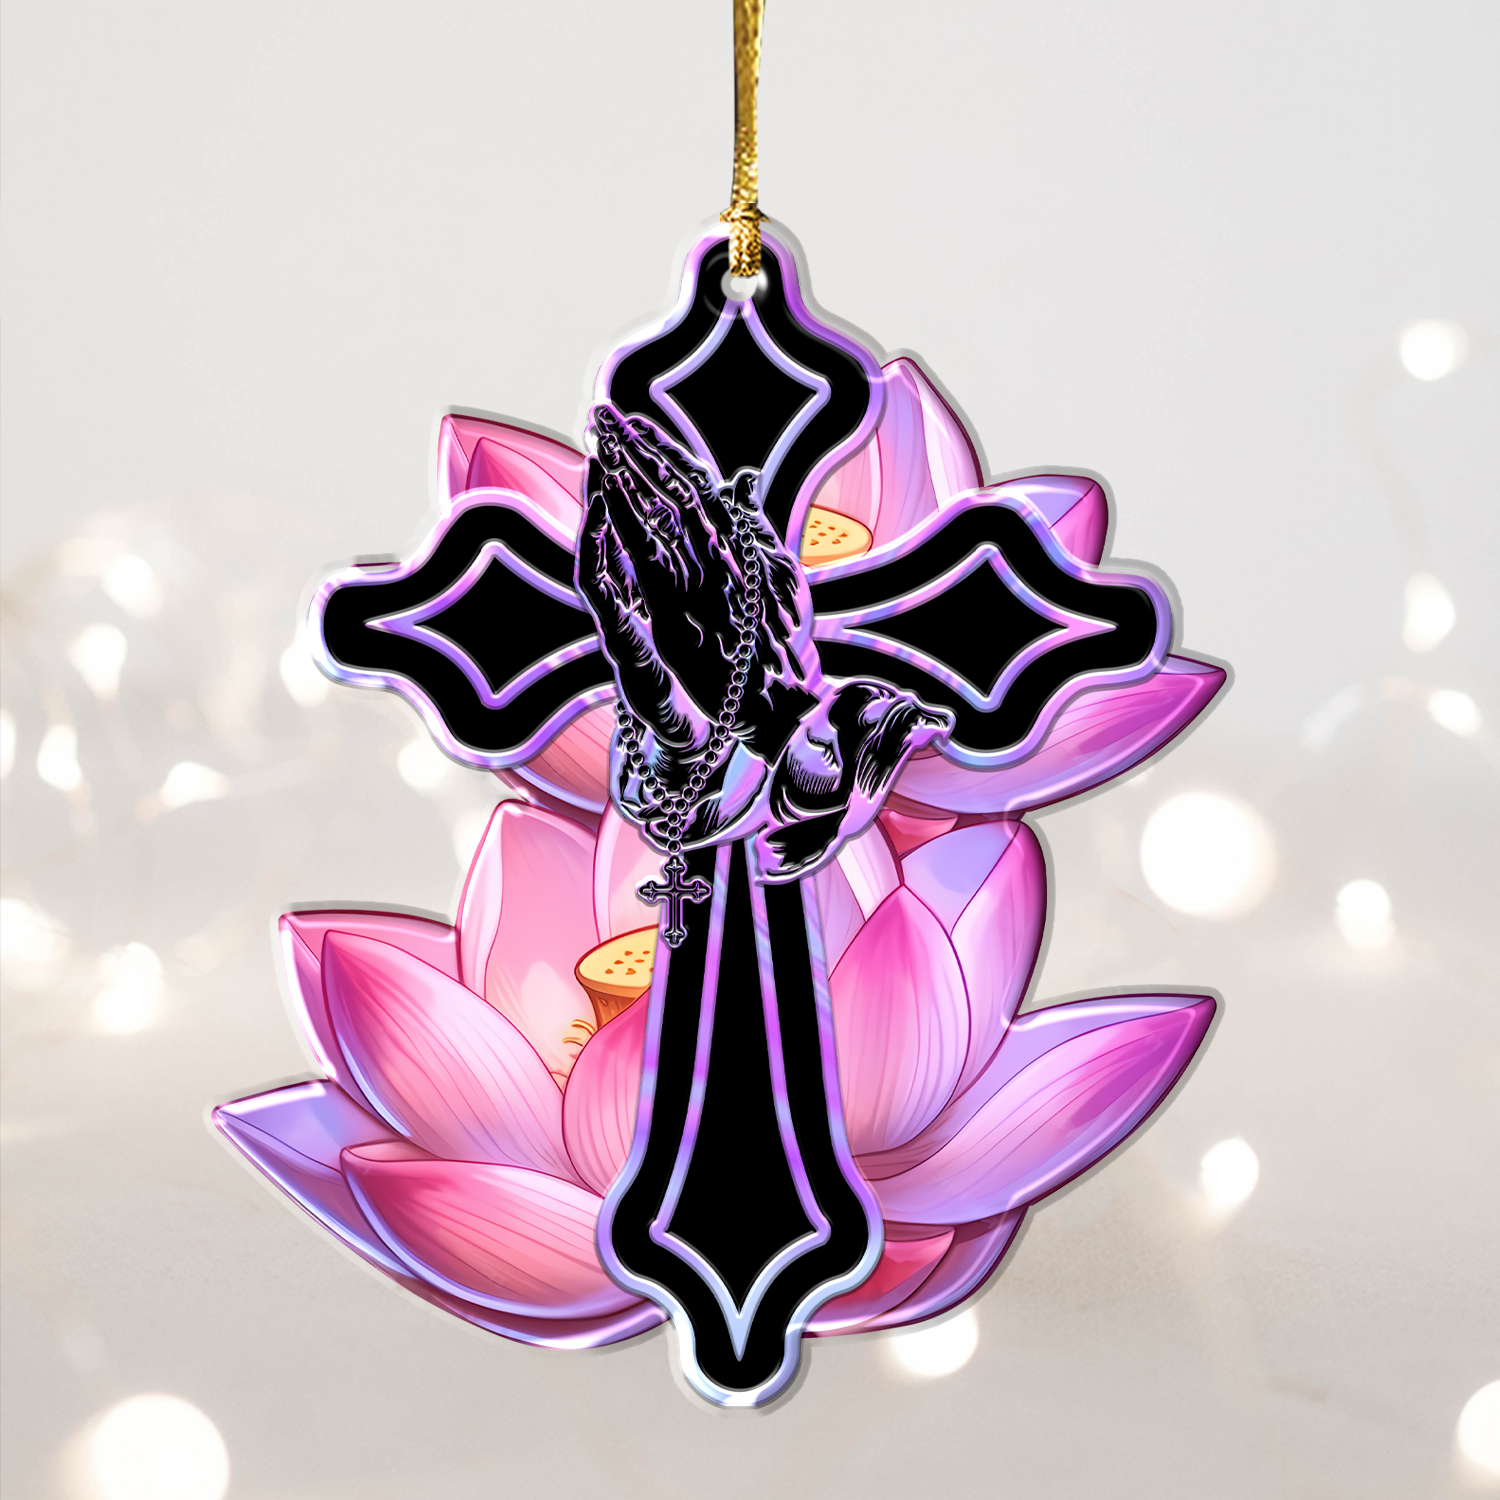 Lotus Flower Pray Faith Cross Christian Ornament Gift Christmas Ornament Car Hanging